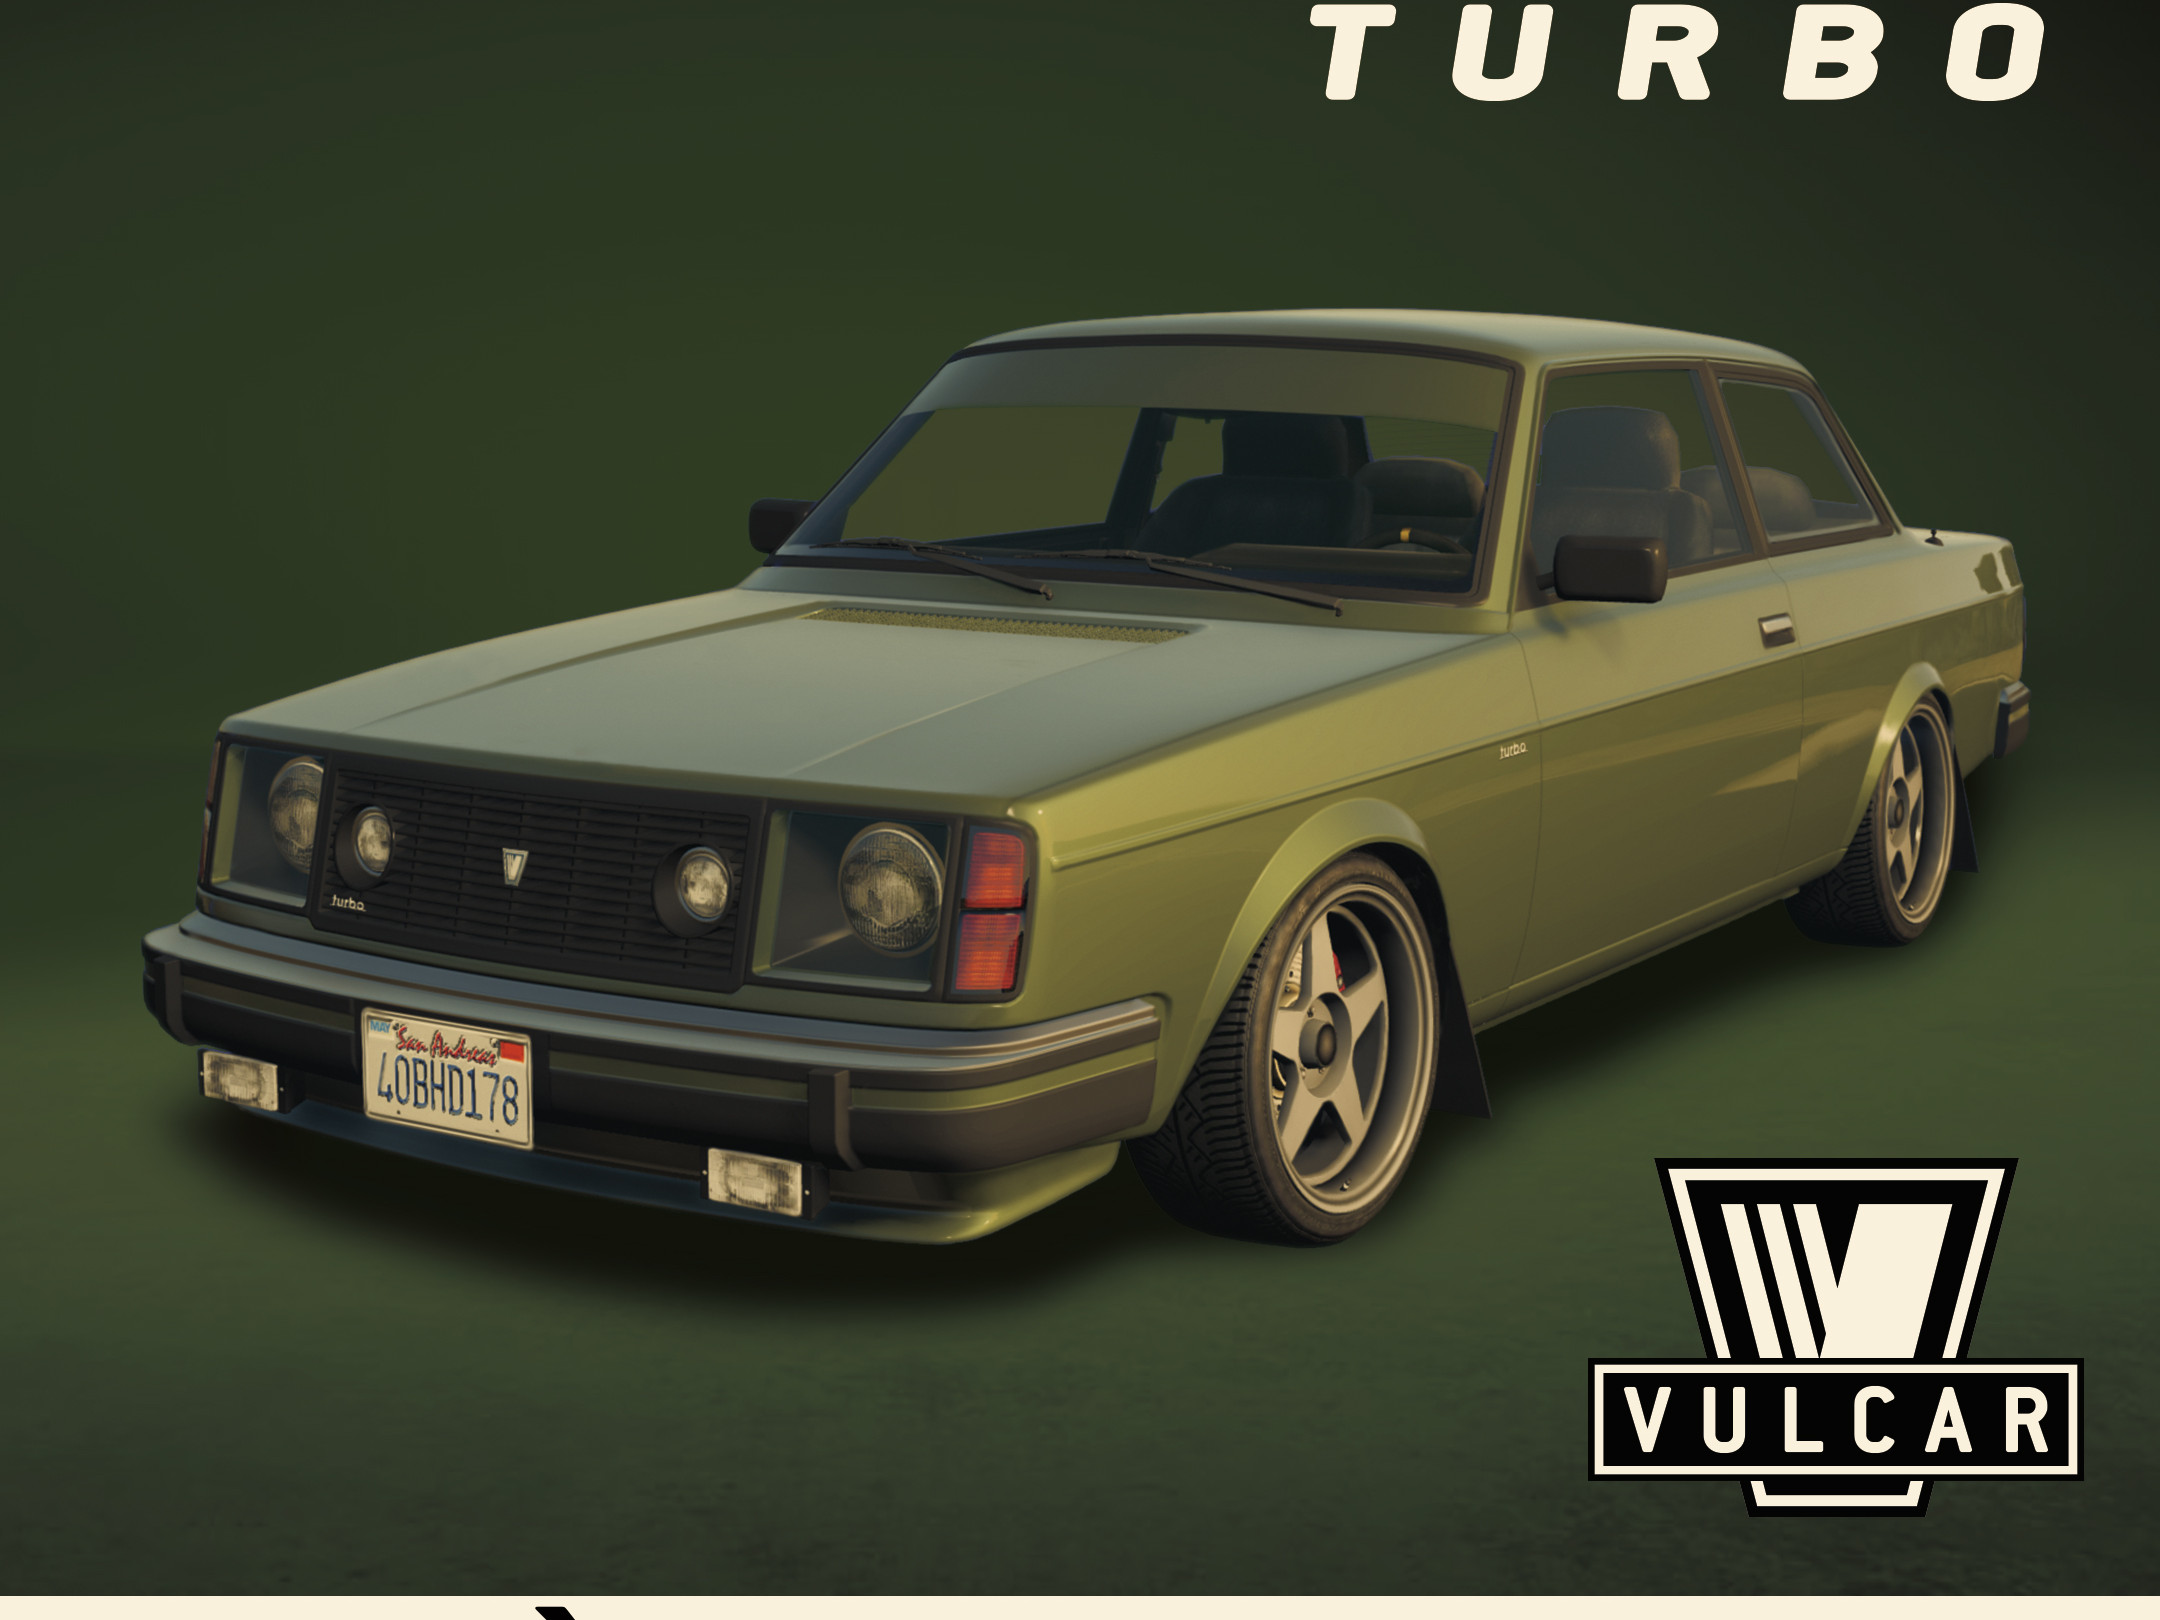 La Vulcar Nebula Turbo débarque dans GTA Online